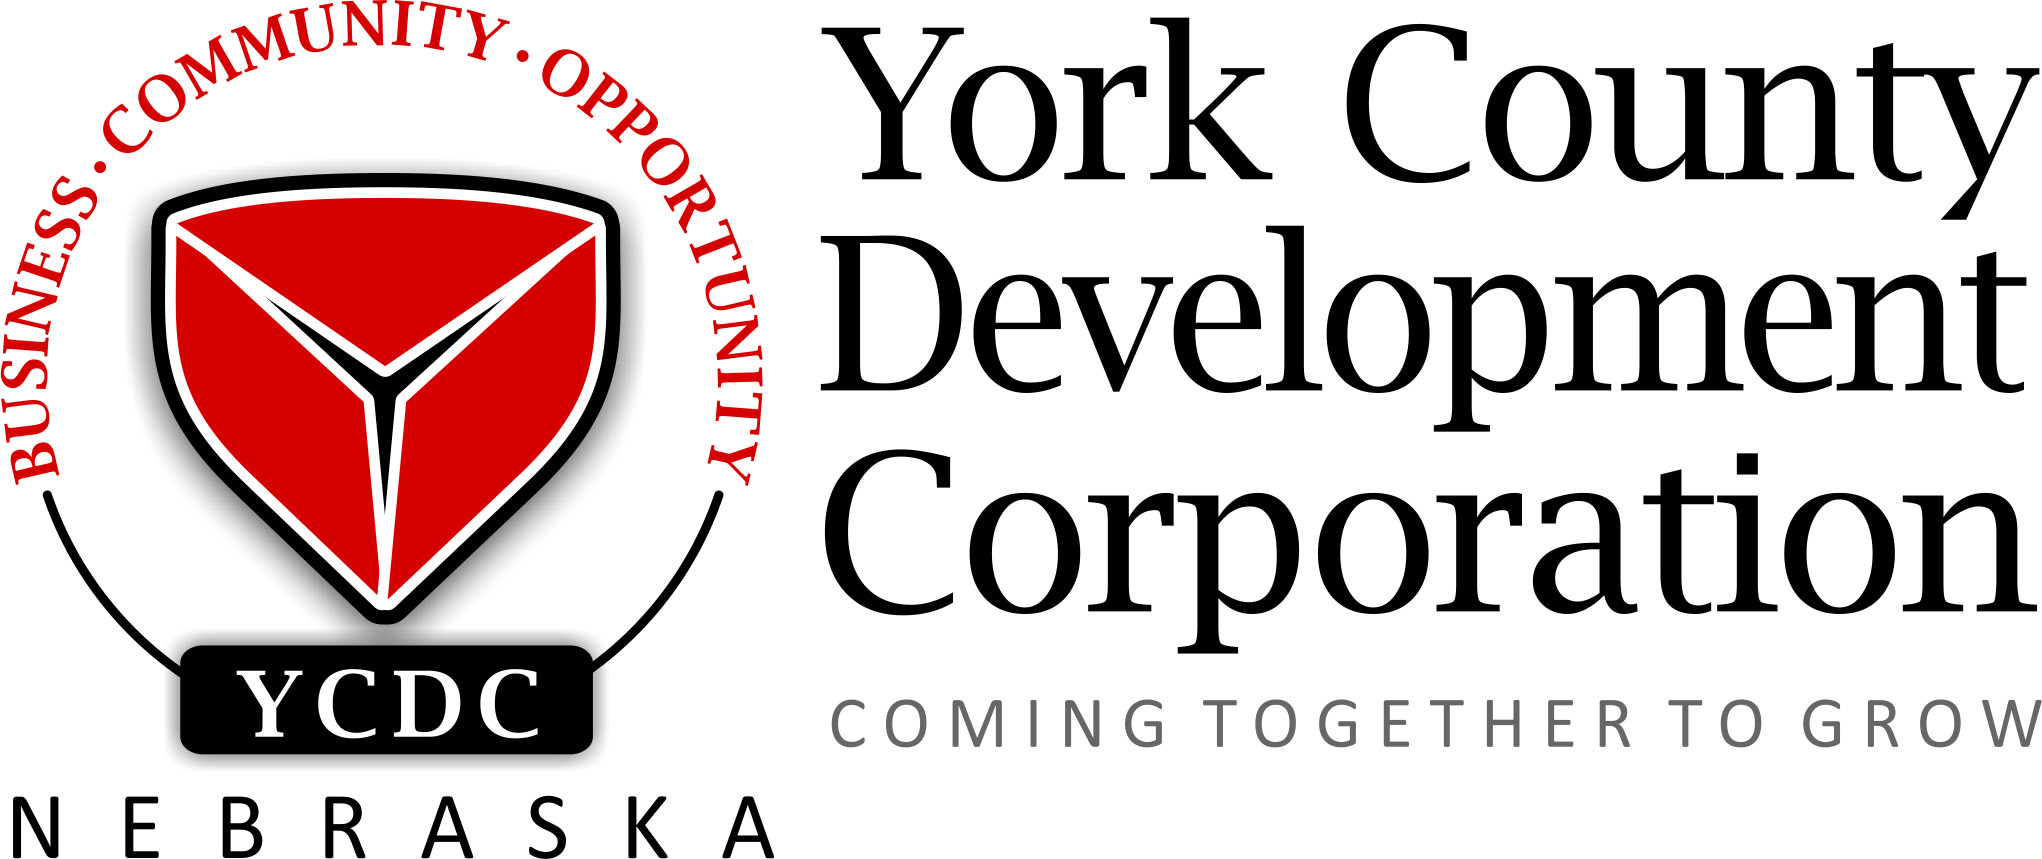 YCDC Announces New 17 County Leadership Program Photo